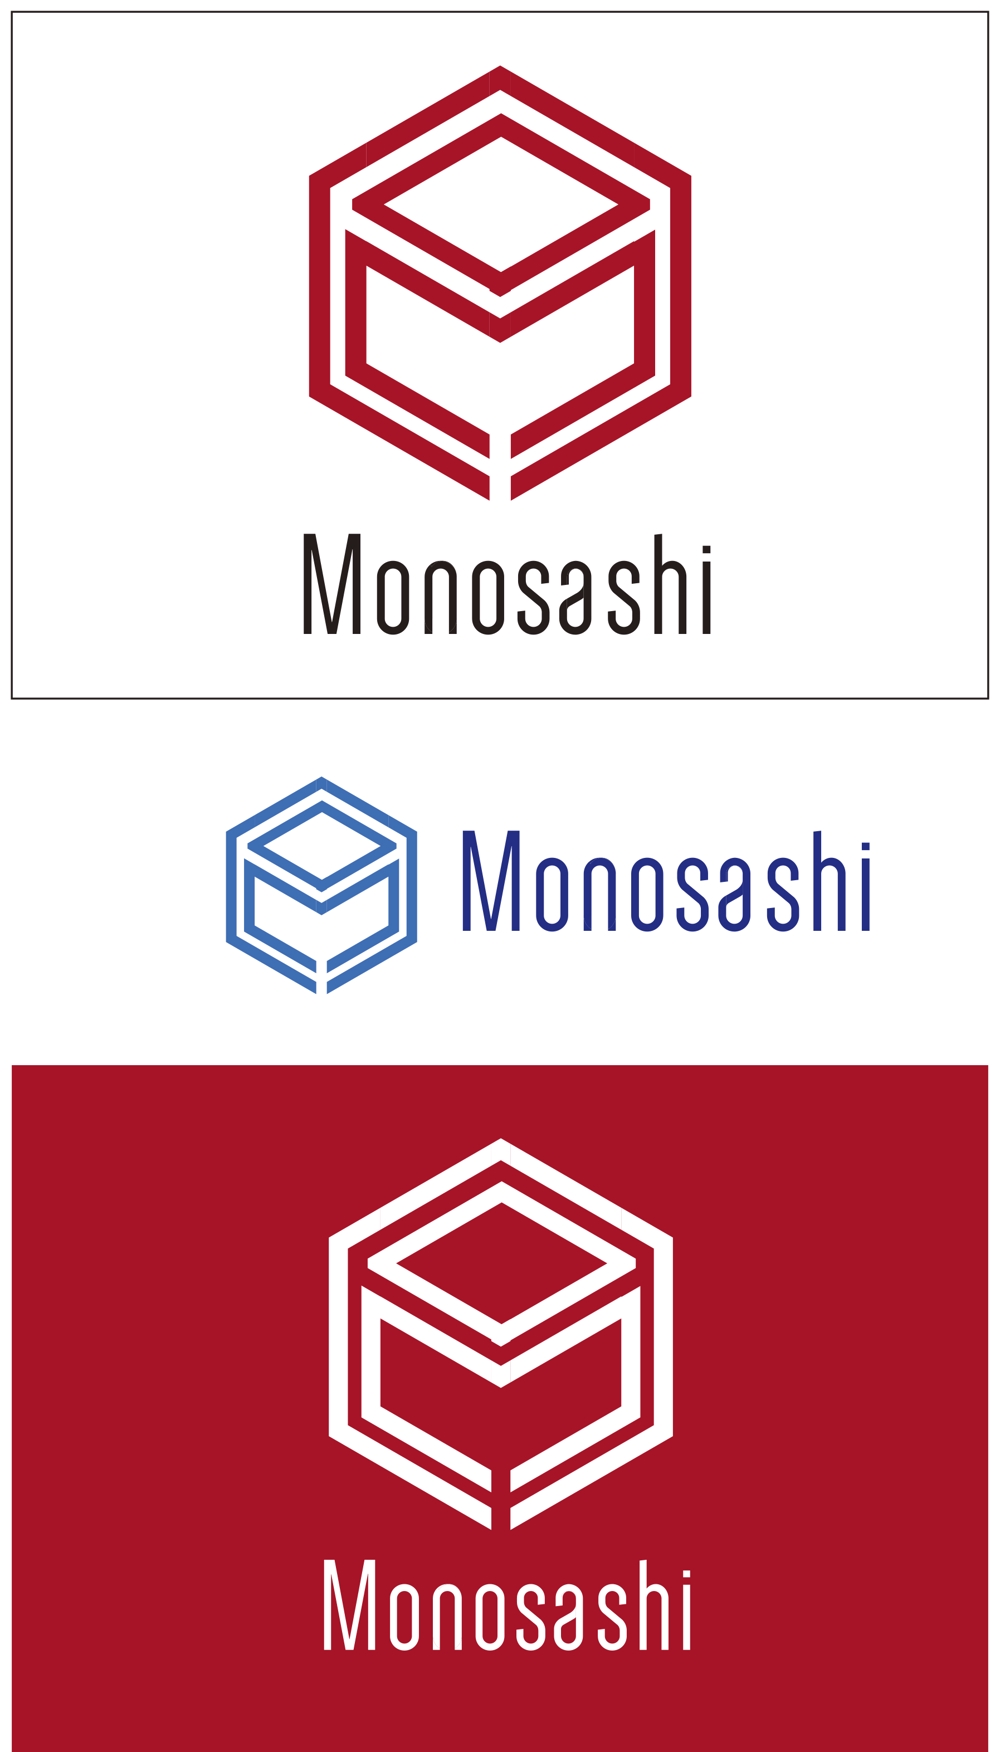 Monosashi-001 4.jpg